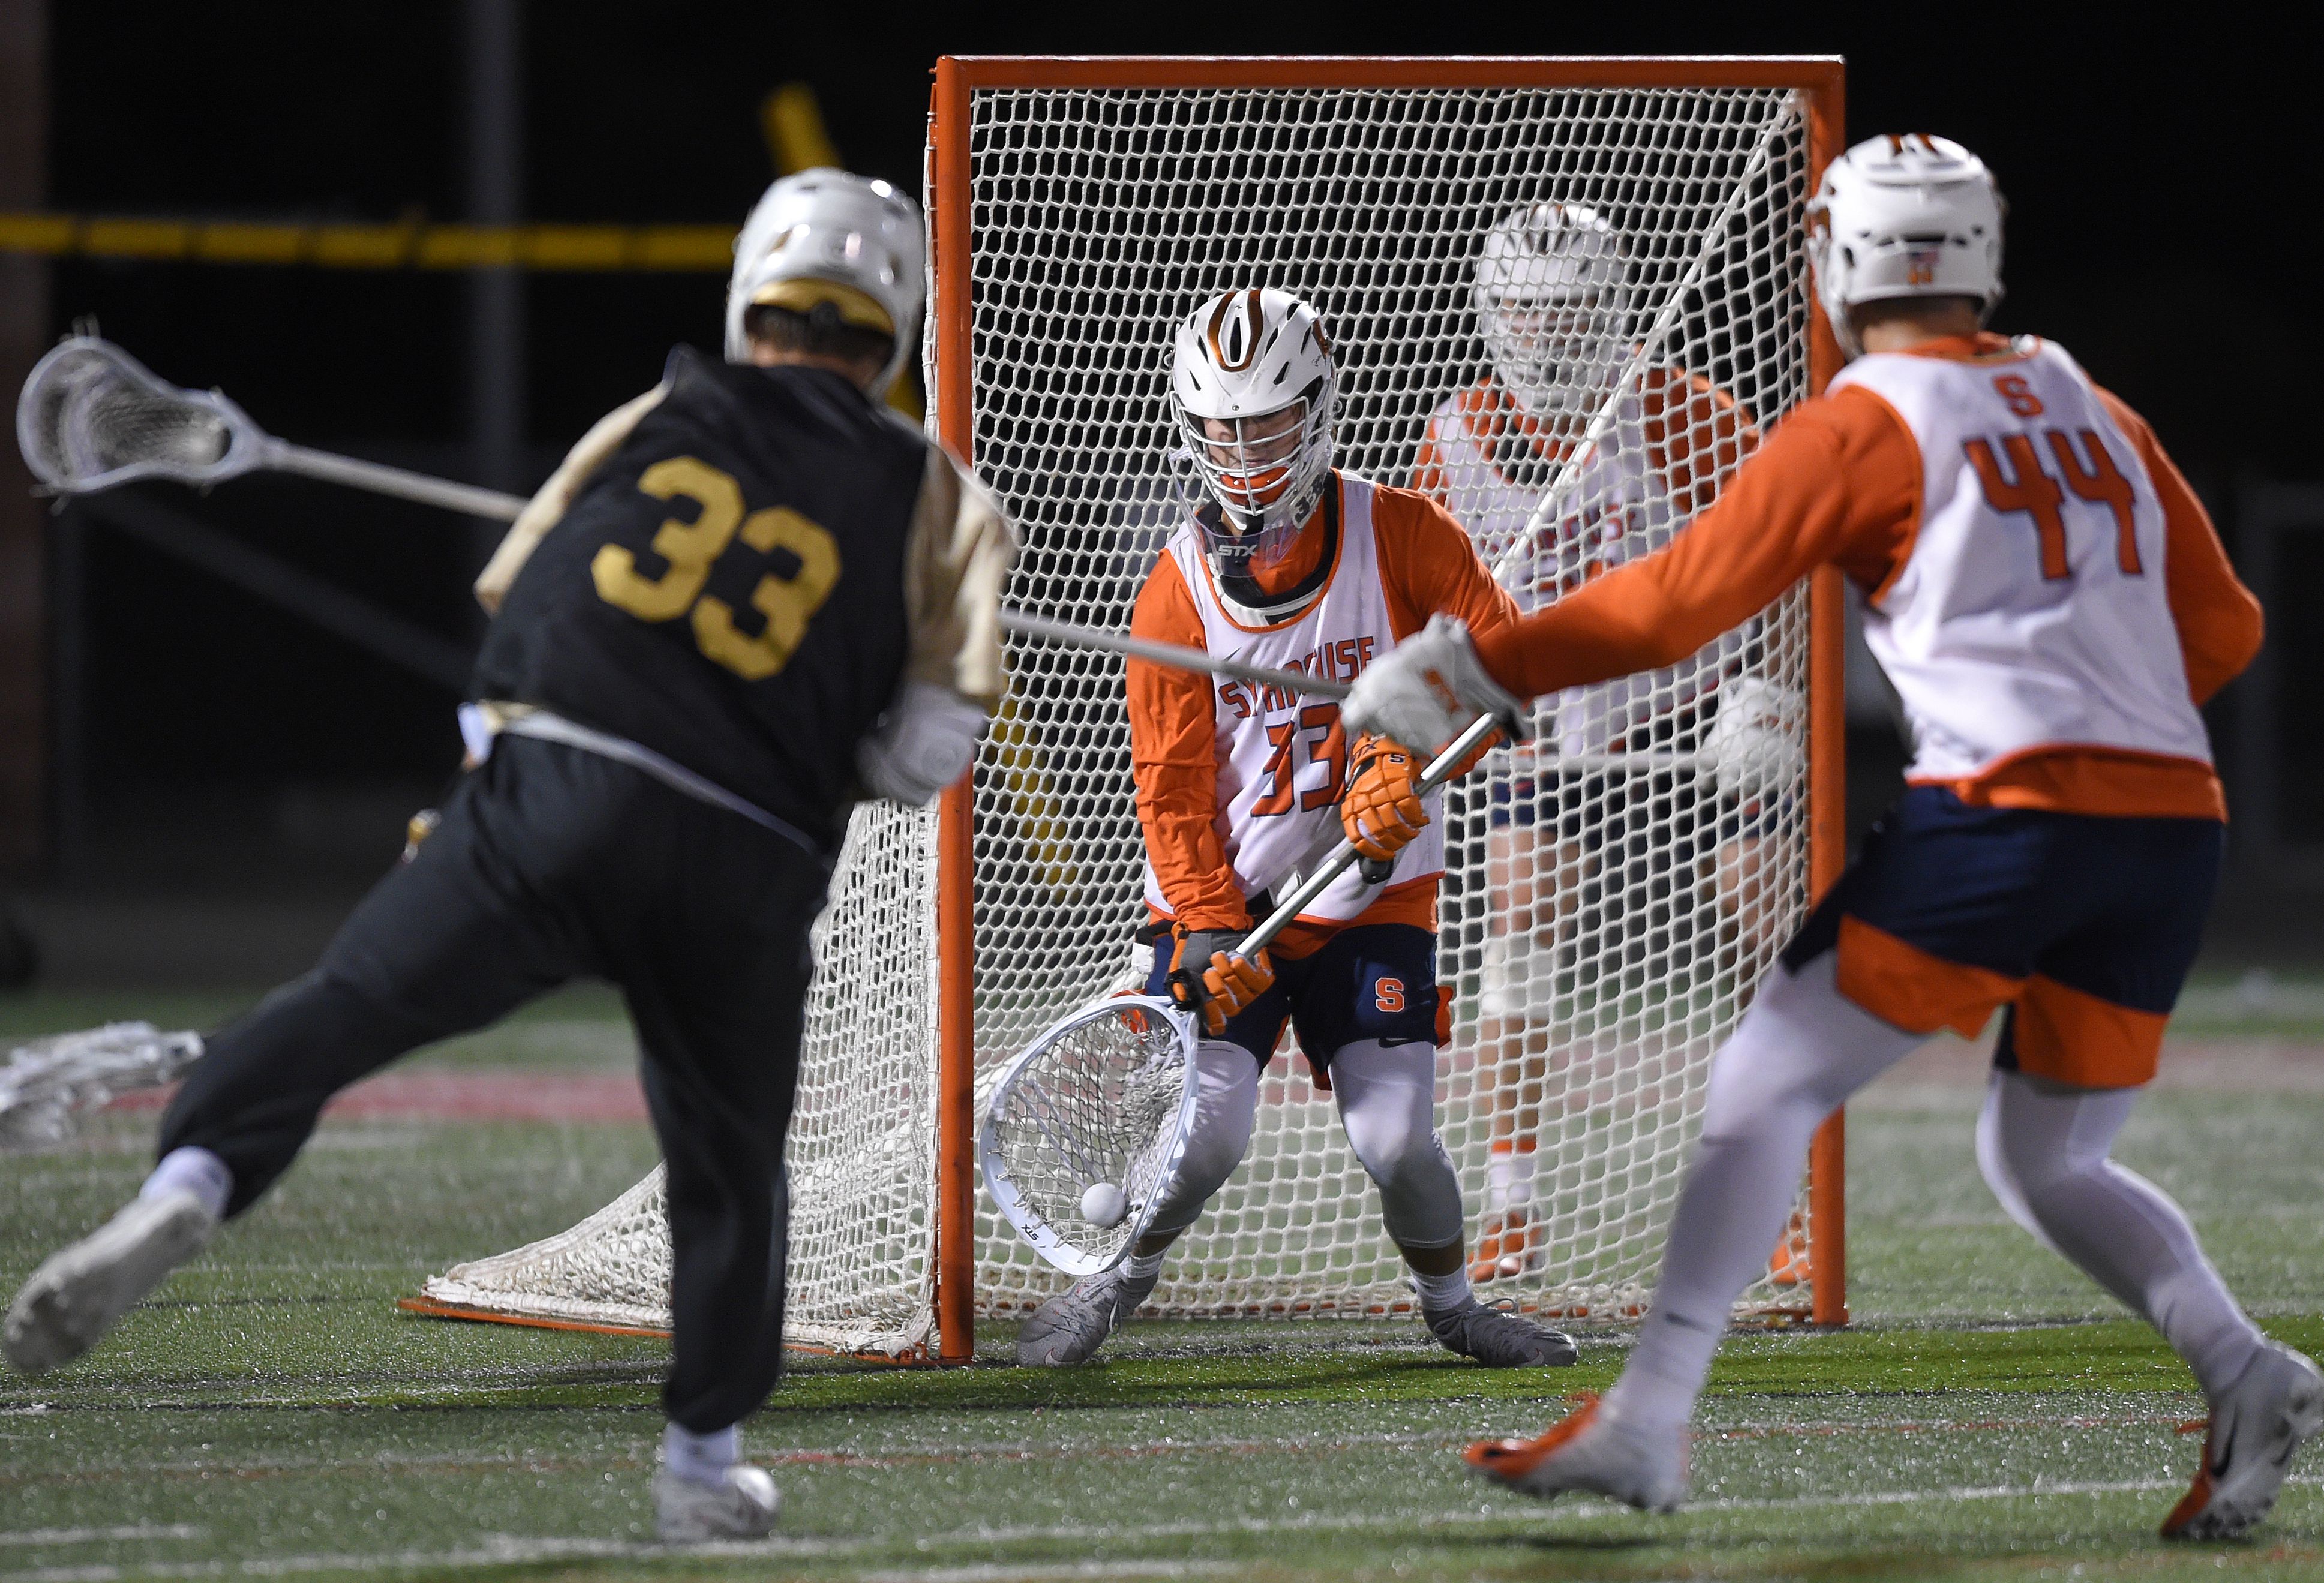 Syracuse University vs. Denver in a college lacrosse fall scrimmage at SUNY  Cortland 